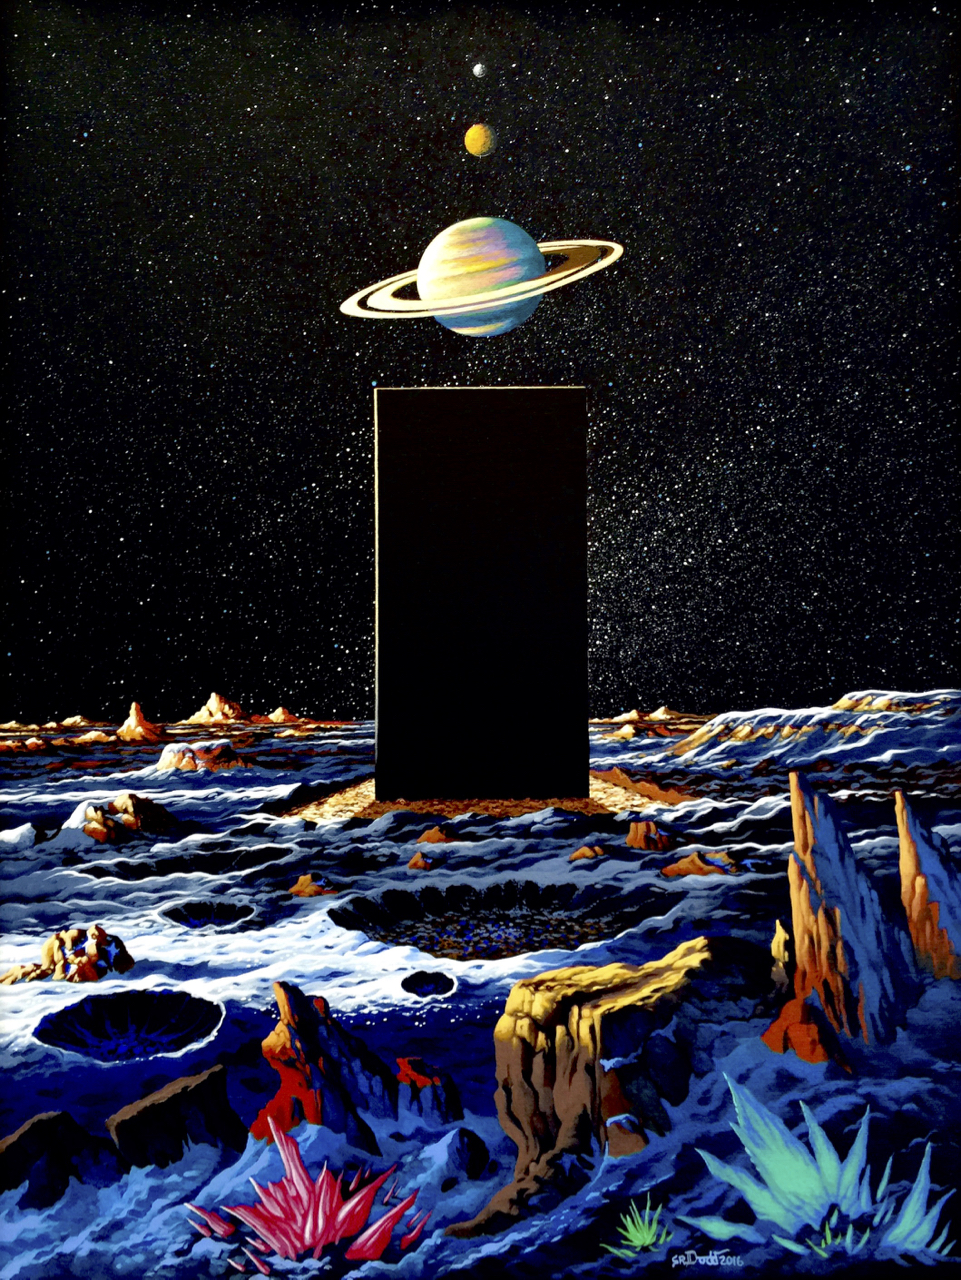 2001: A Space Oddyssey novel artwork